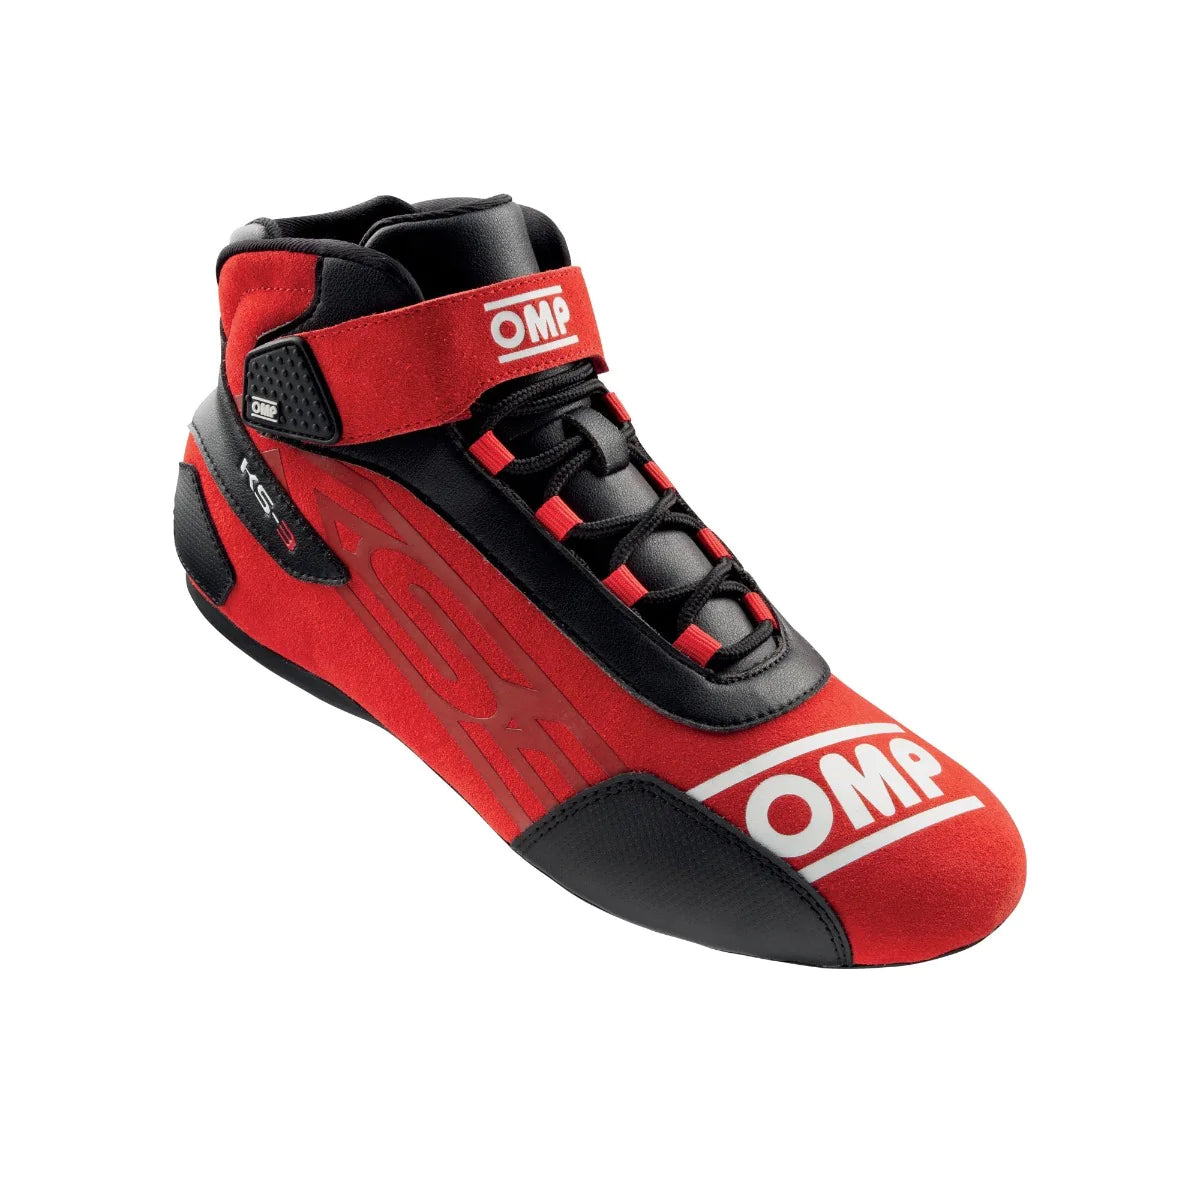 OMP KS-3 Kart Racing Shoes